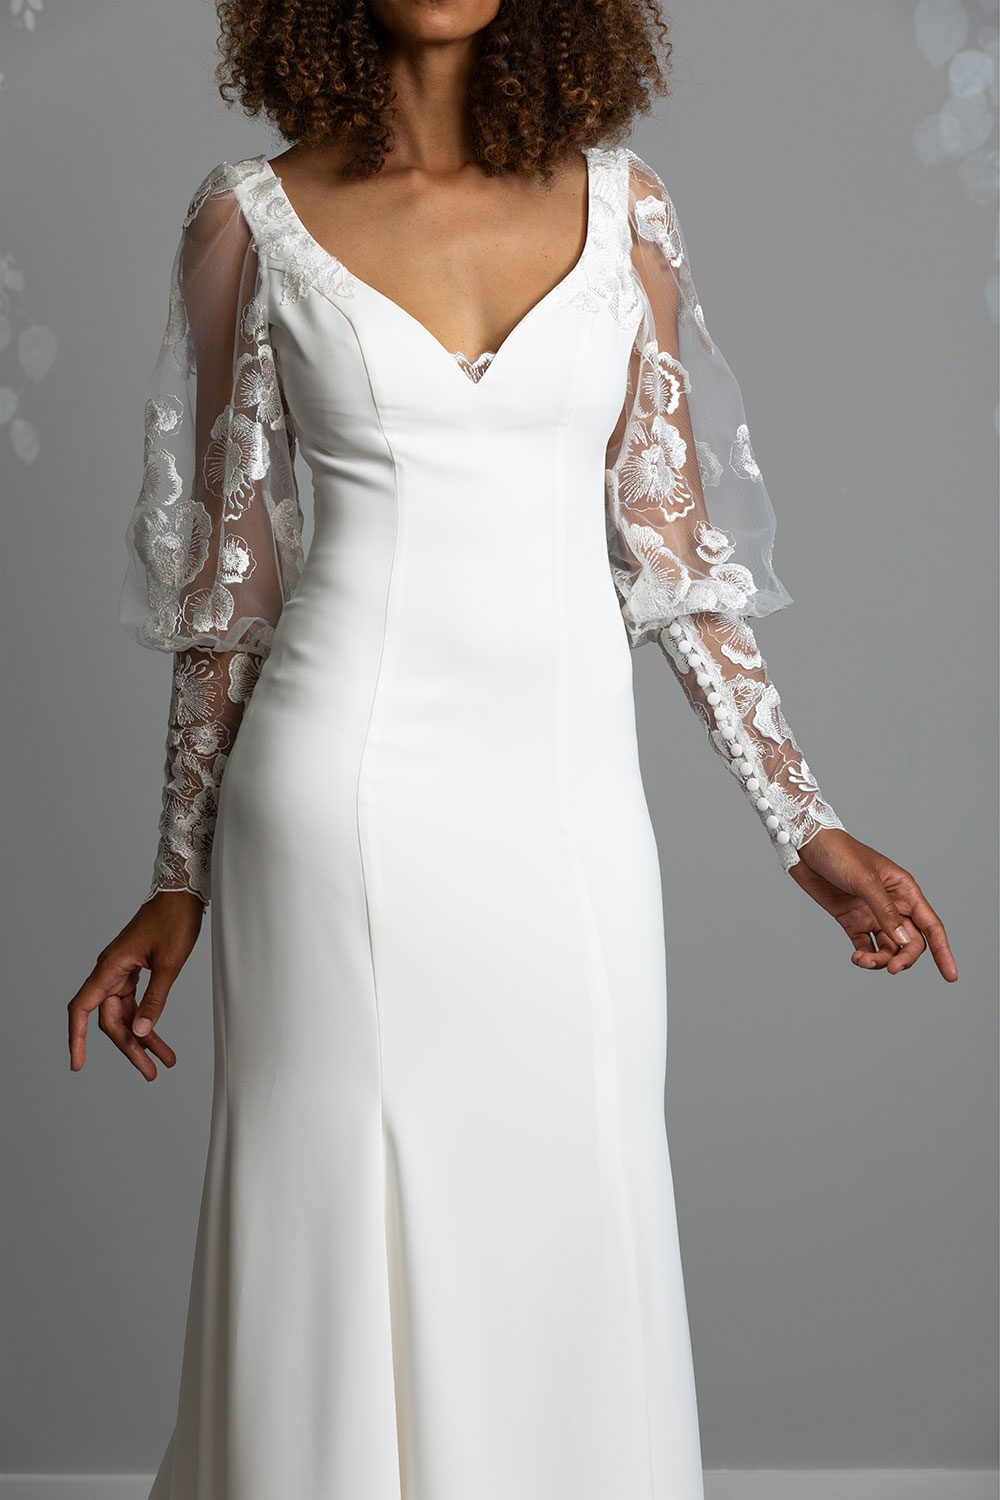 Sonia Wedding Dress by Vinka Design 7